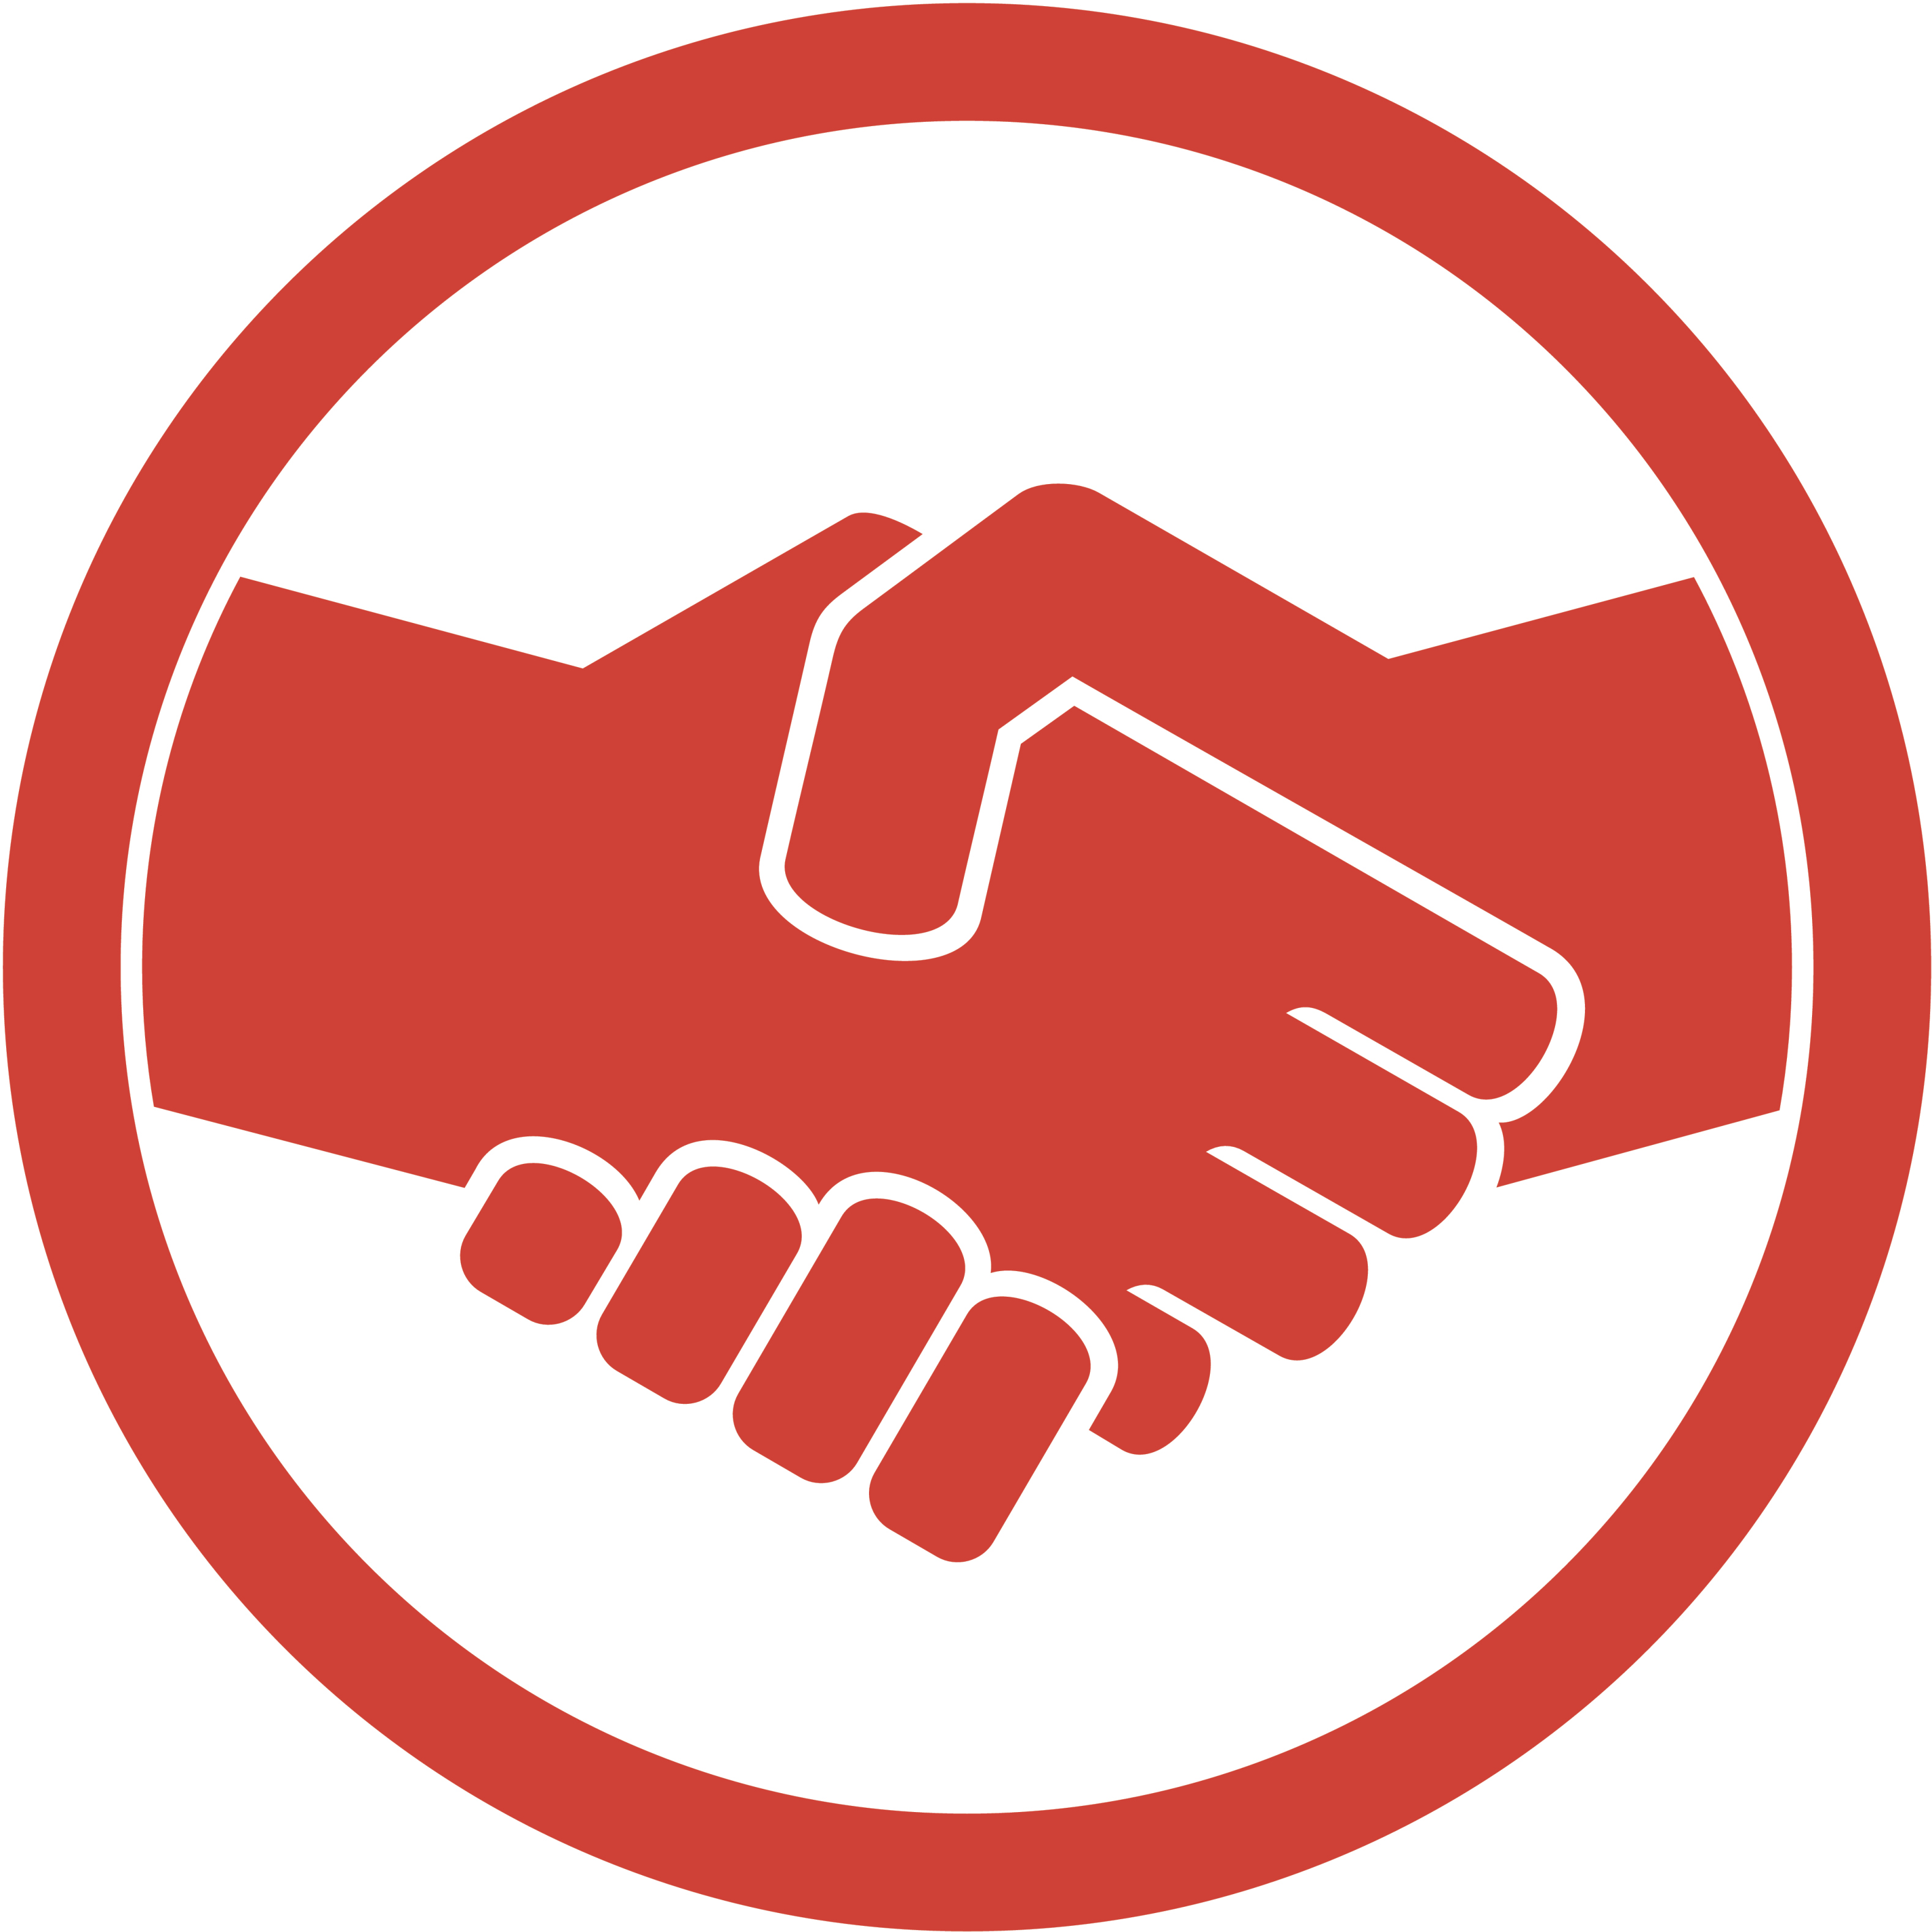 Handshaker logo app - lopicash